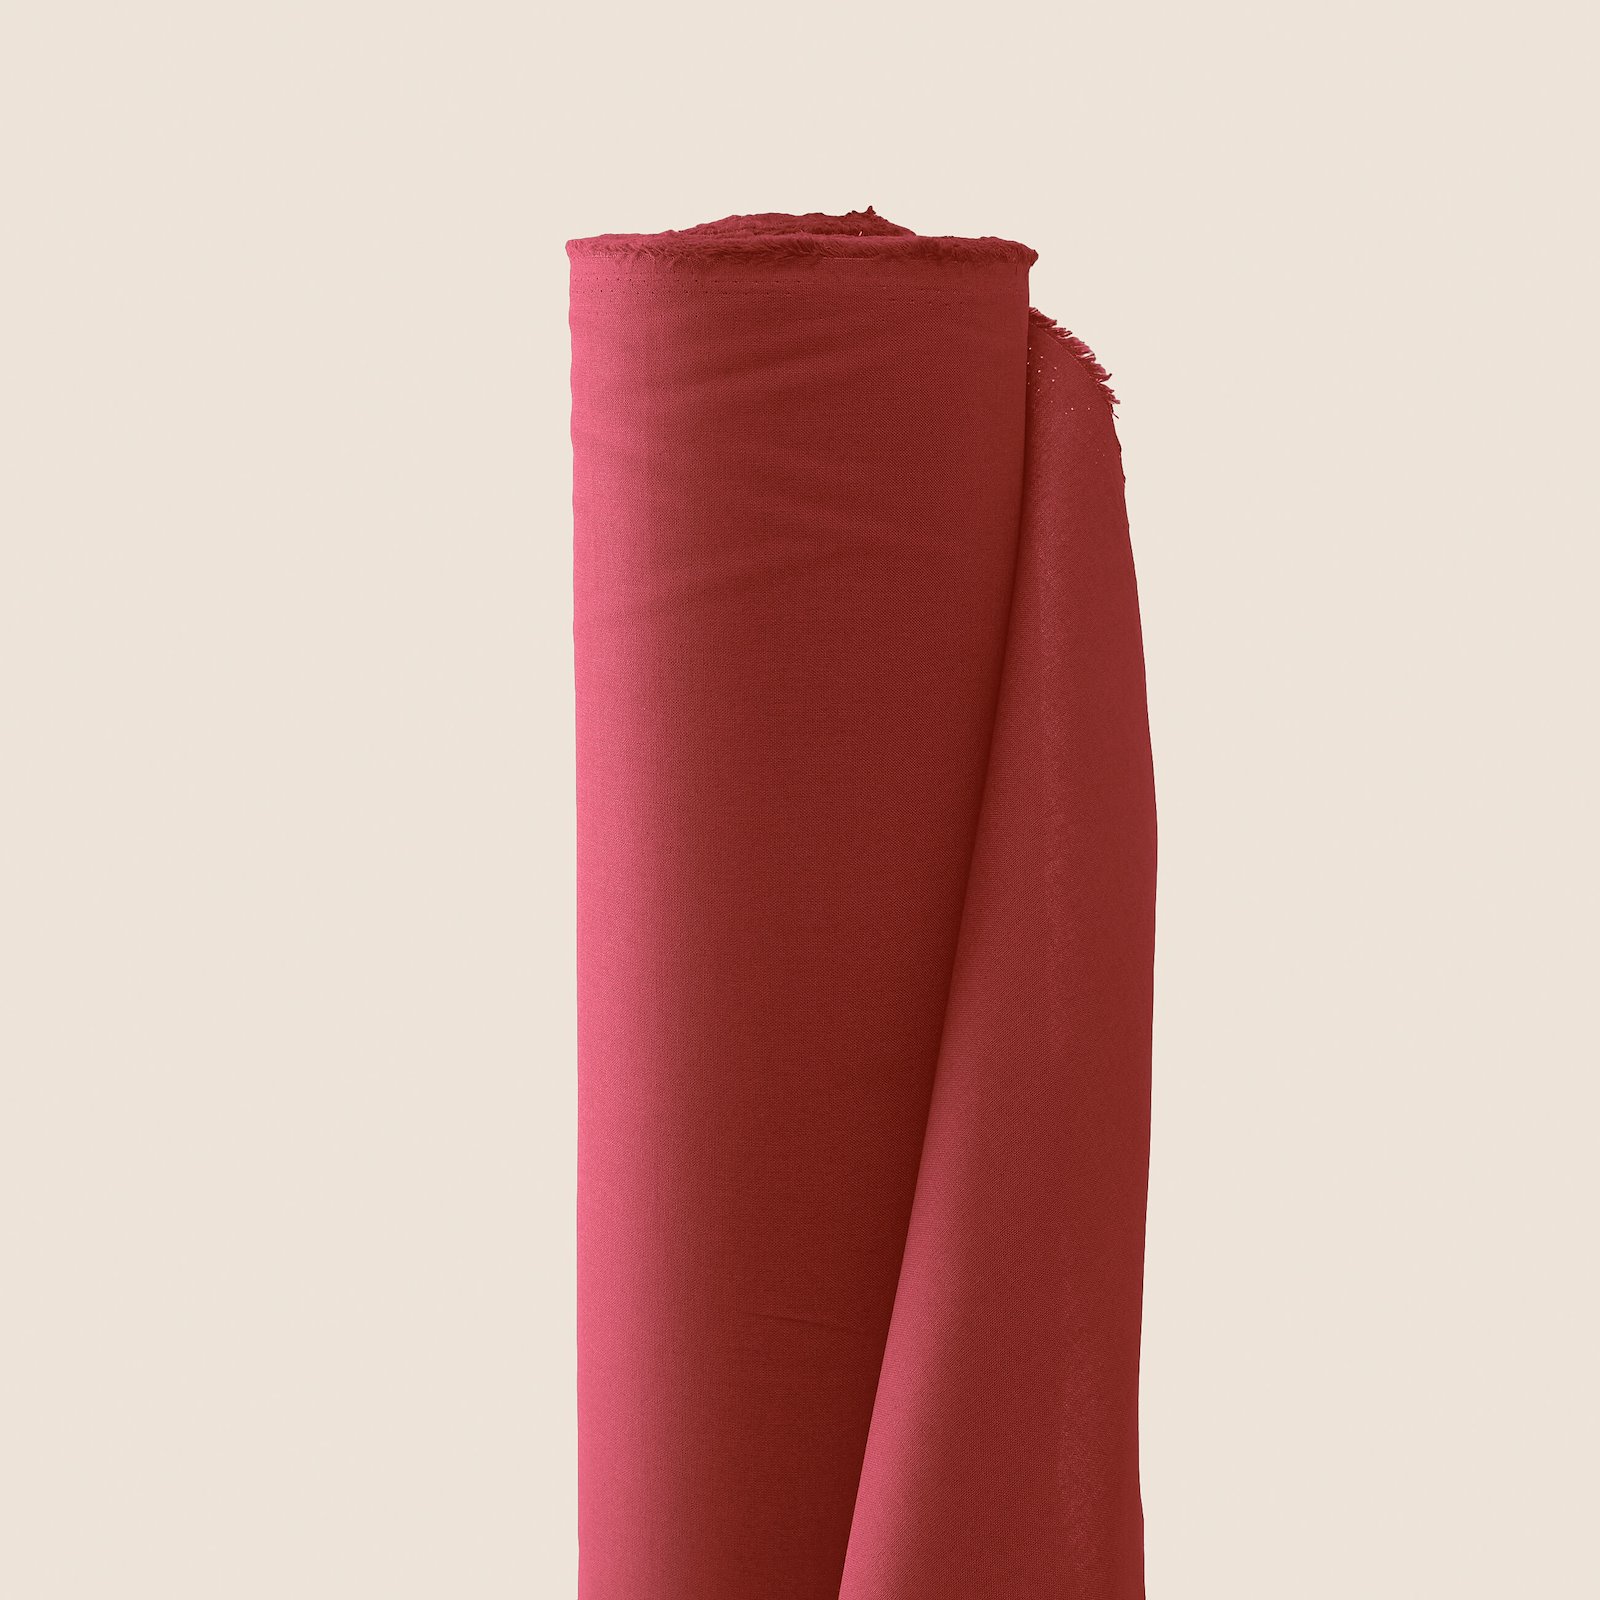 Luxus Baumwolle, klassisches rot 4300_pack_d